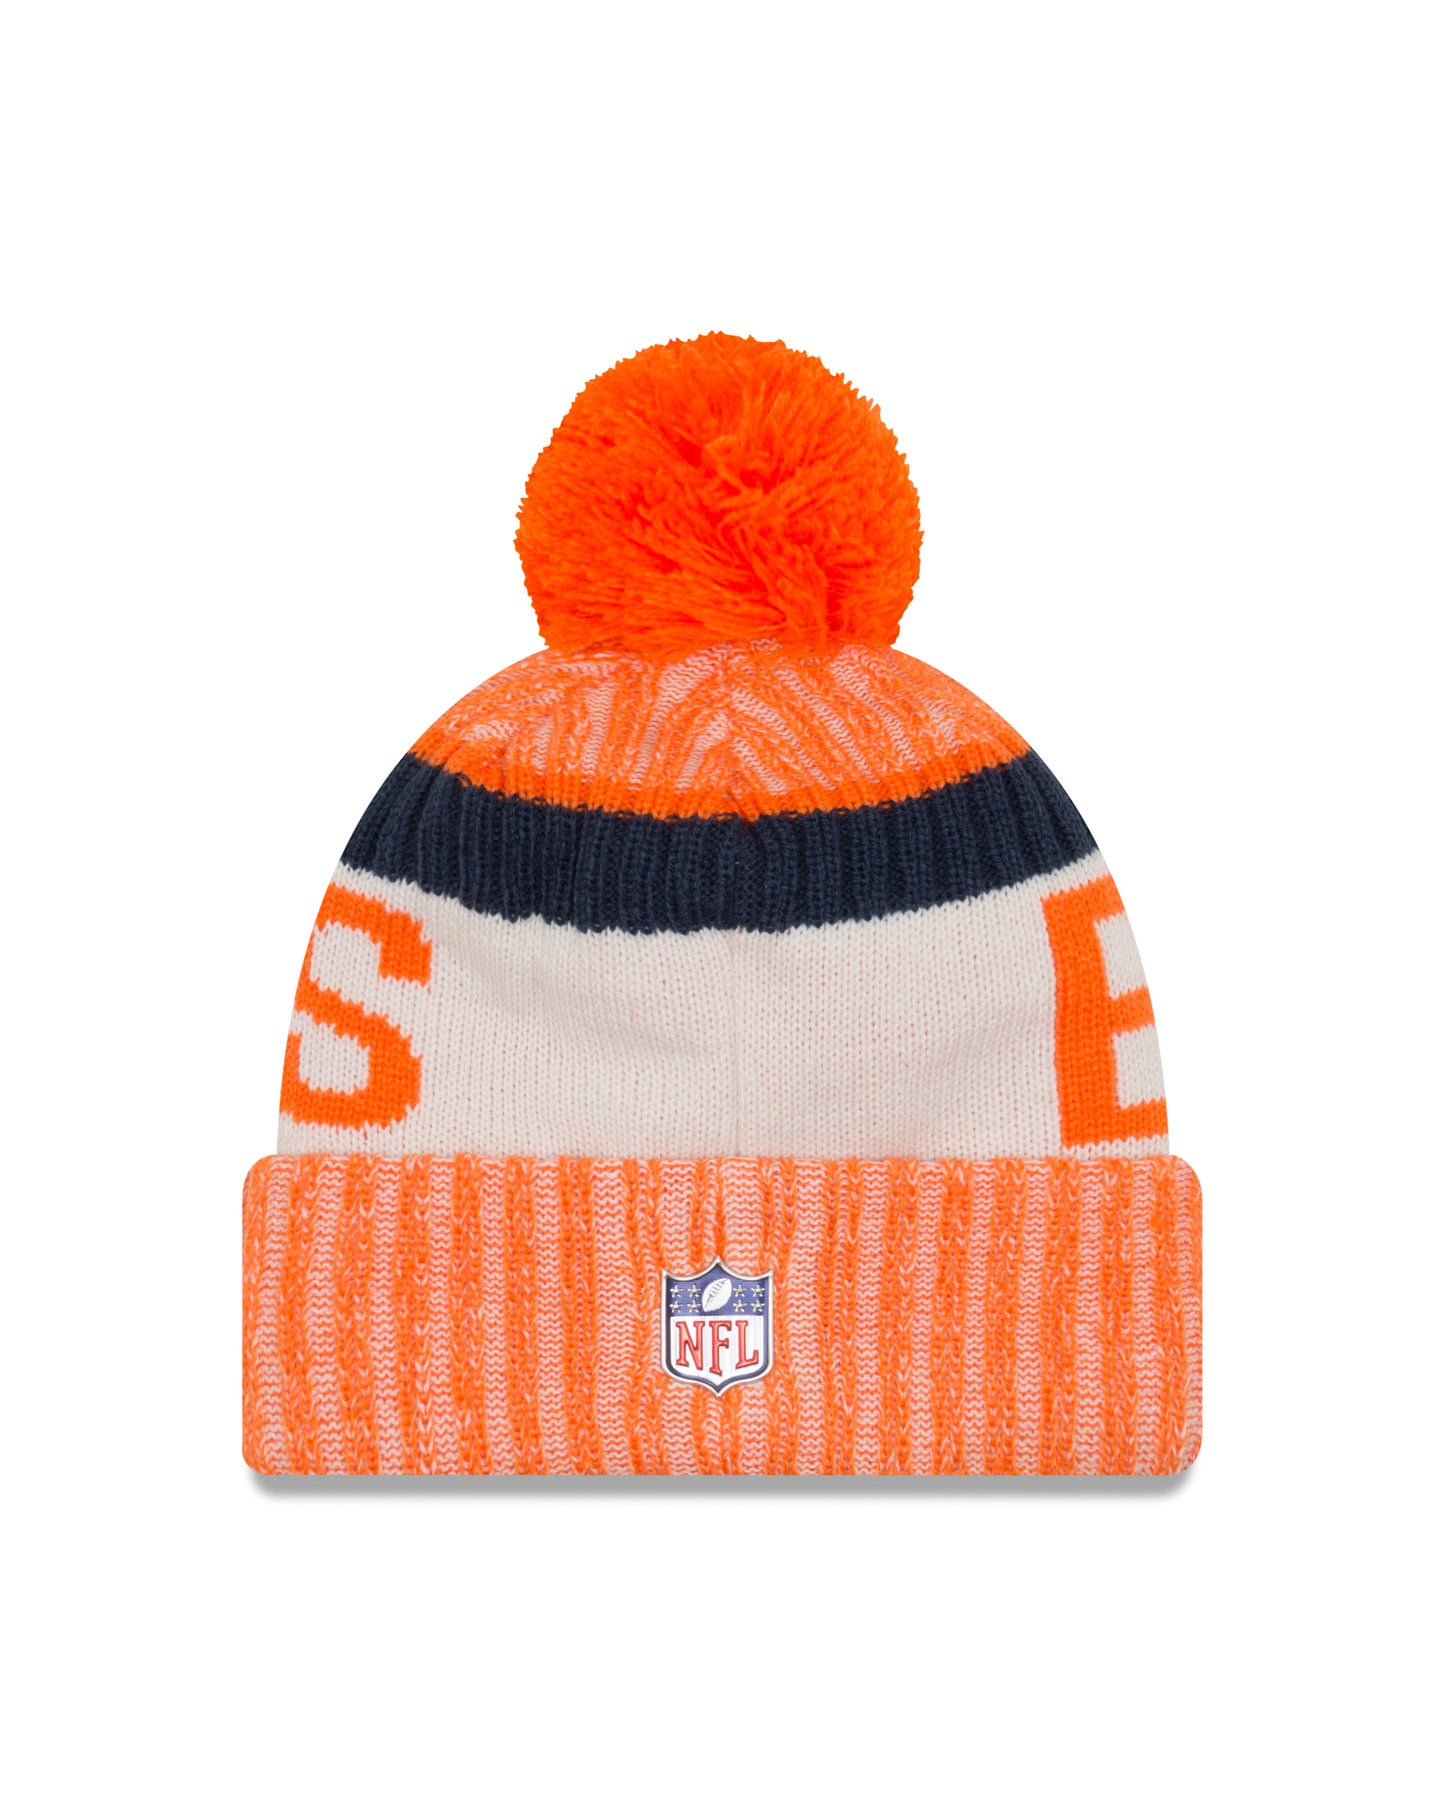 Denver Broncos New Era Sideline Sport Cuffed Pom Knit Hat- Orange